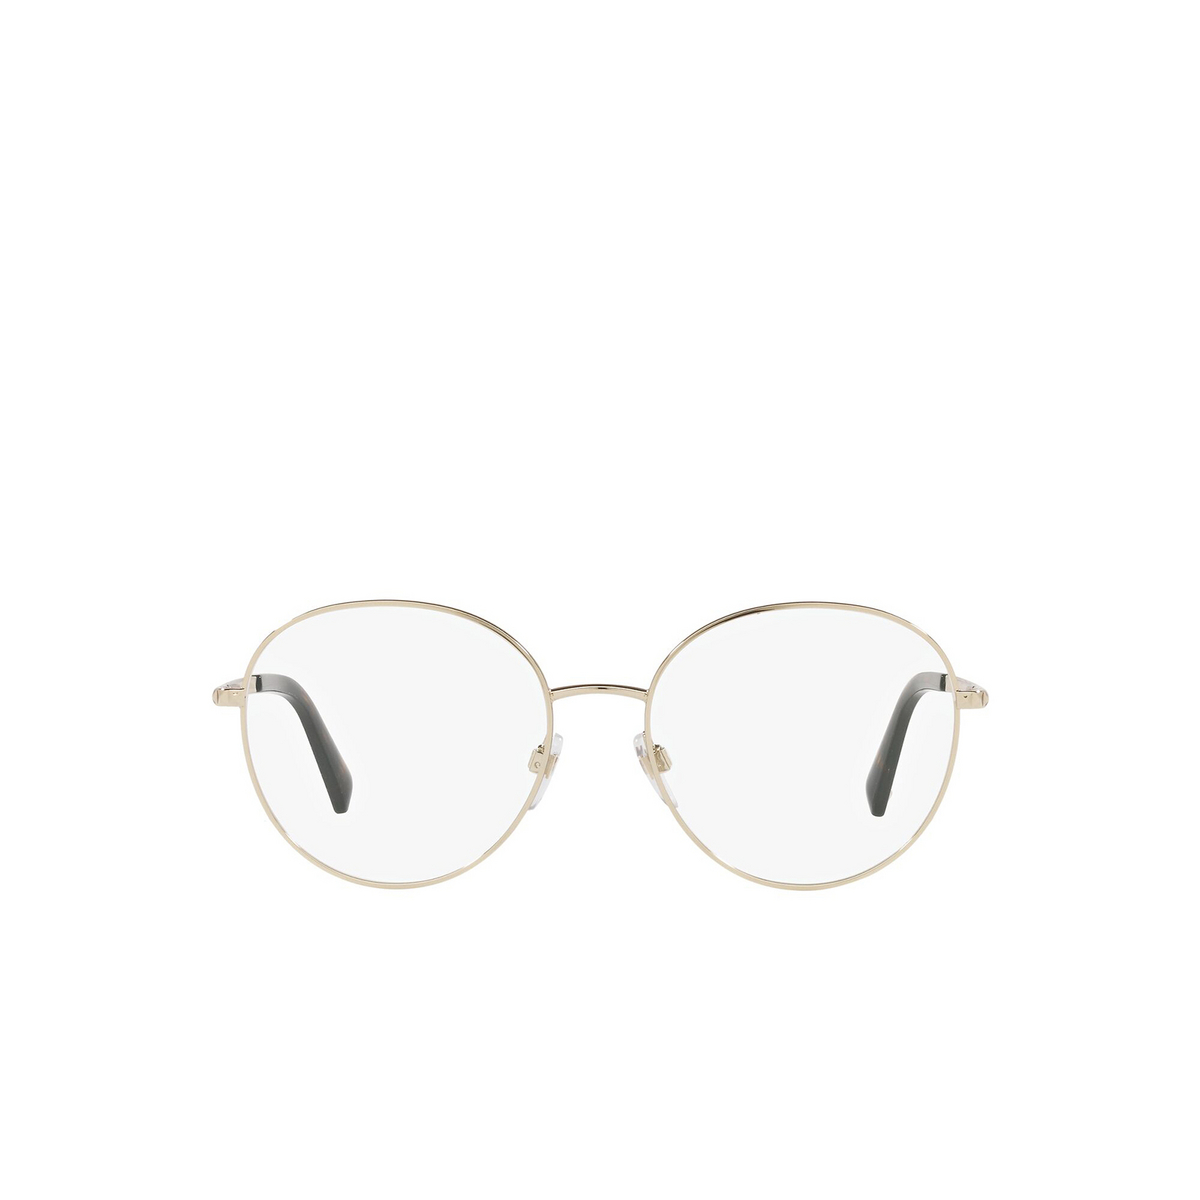 Valentino® Round Sunglasses: VA1025 color Light Gold 3003 - front view.